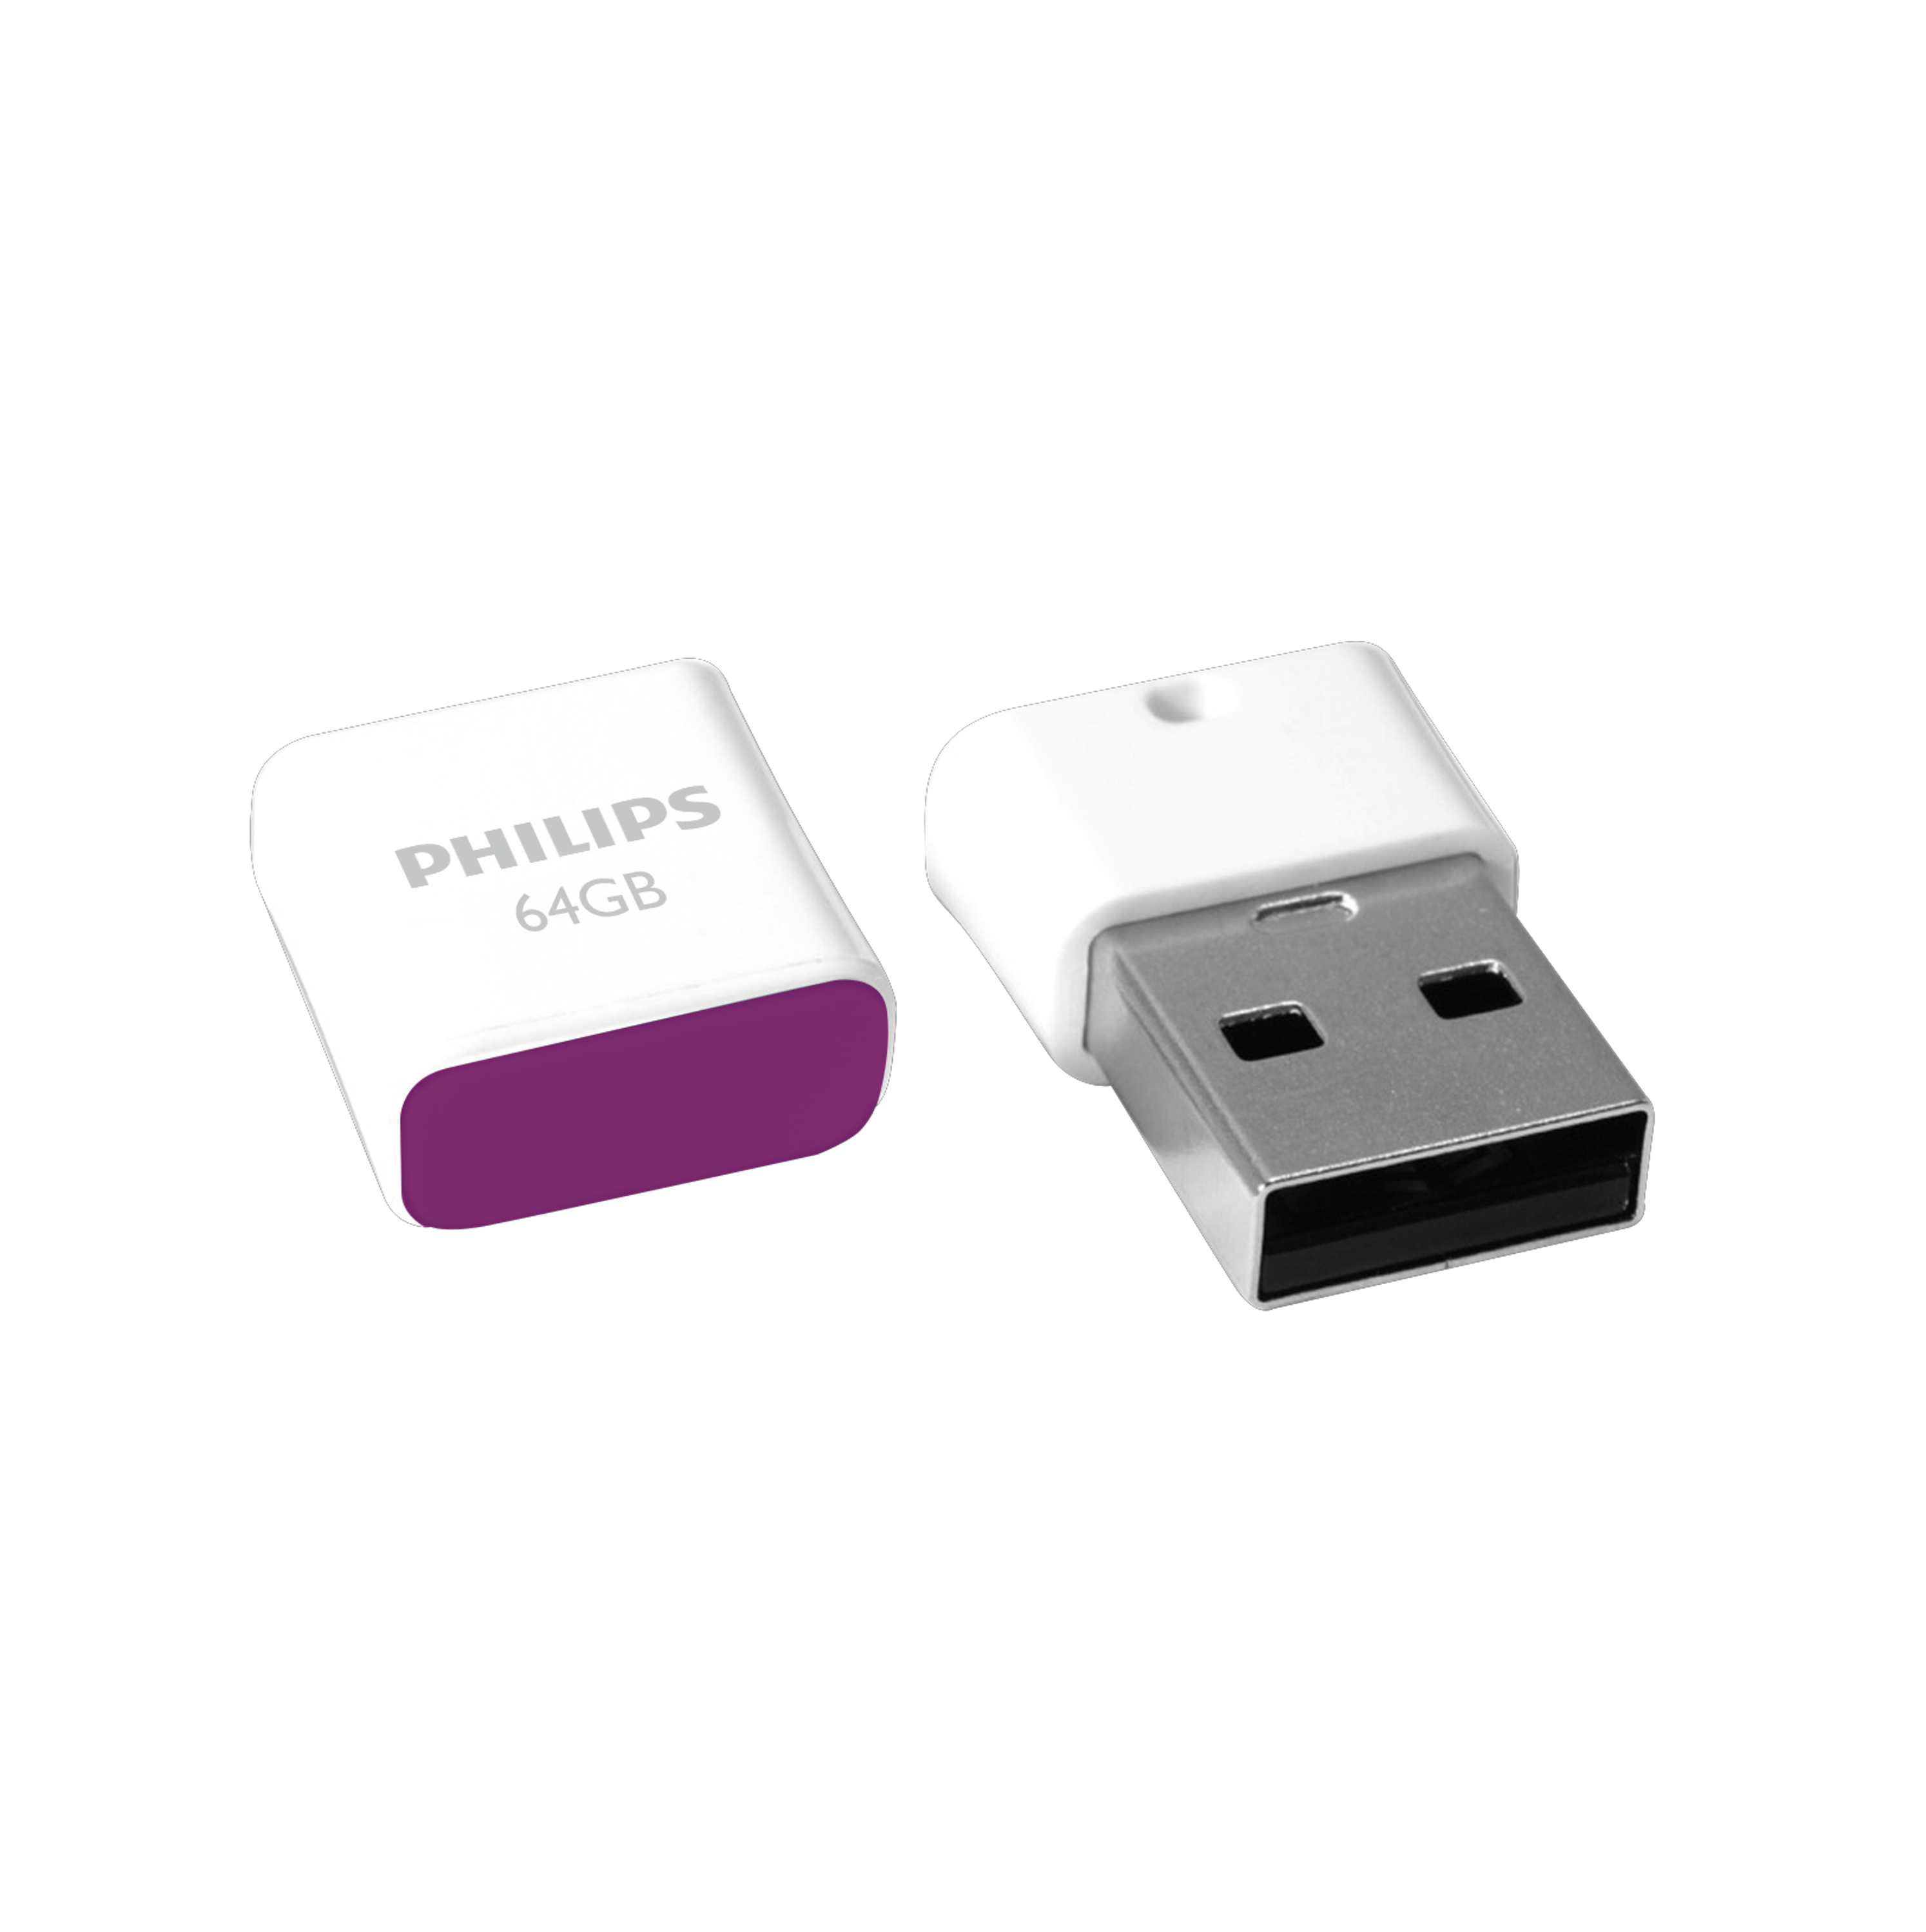 PHILIPS USB weiss, GB) Edition, 64GB Pico Stick USB-Stick (Weiß, 64